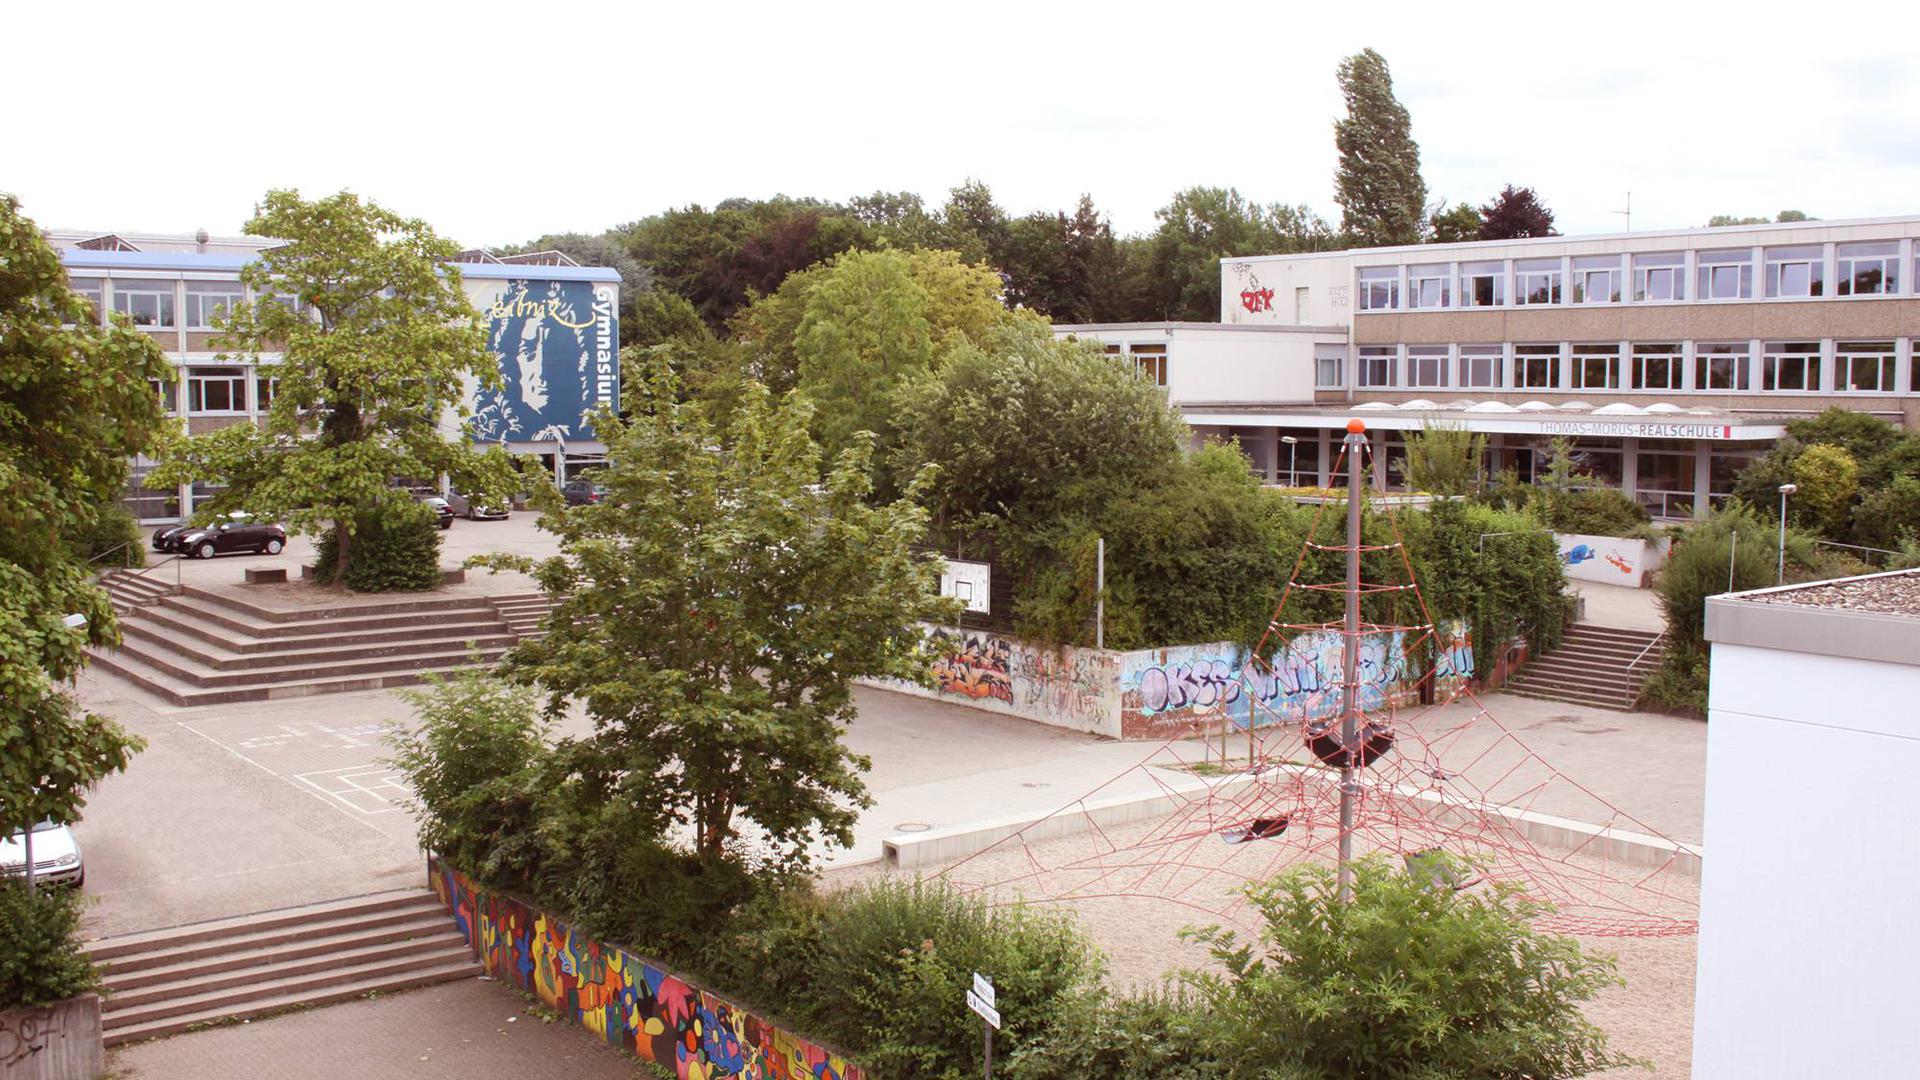 Realschule östringen